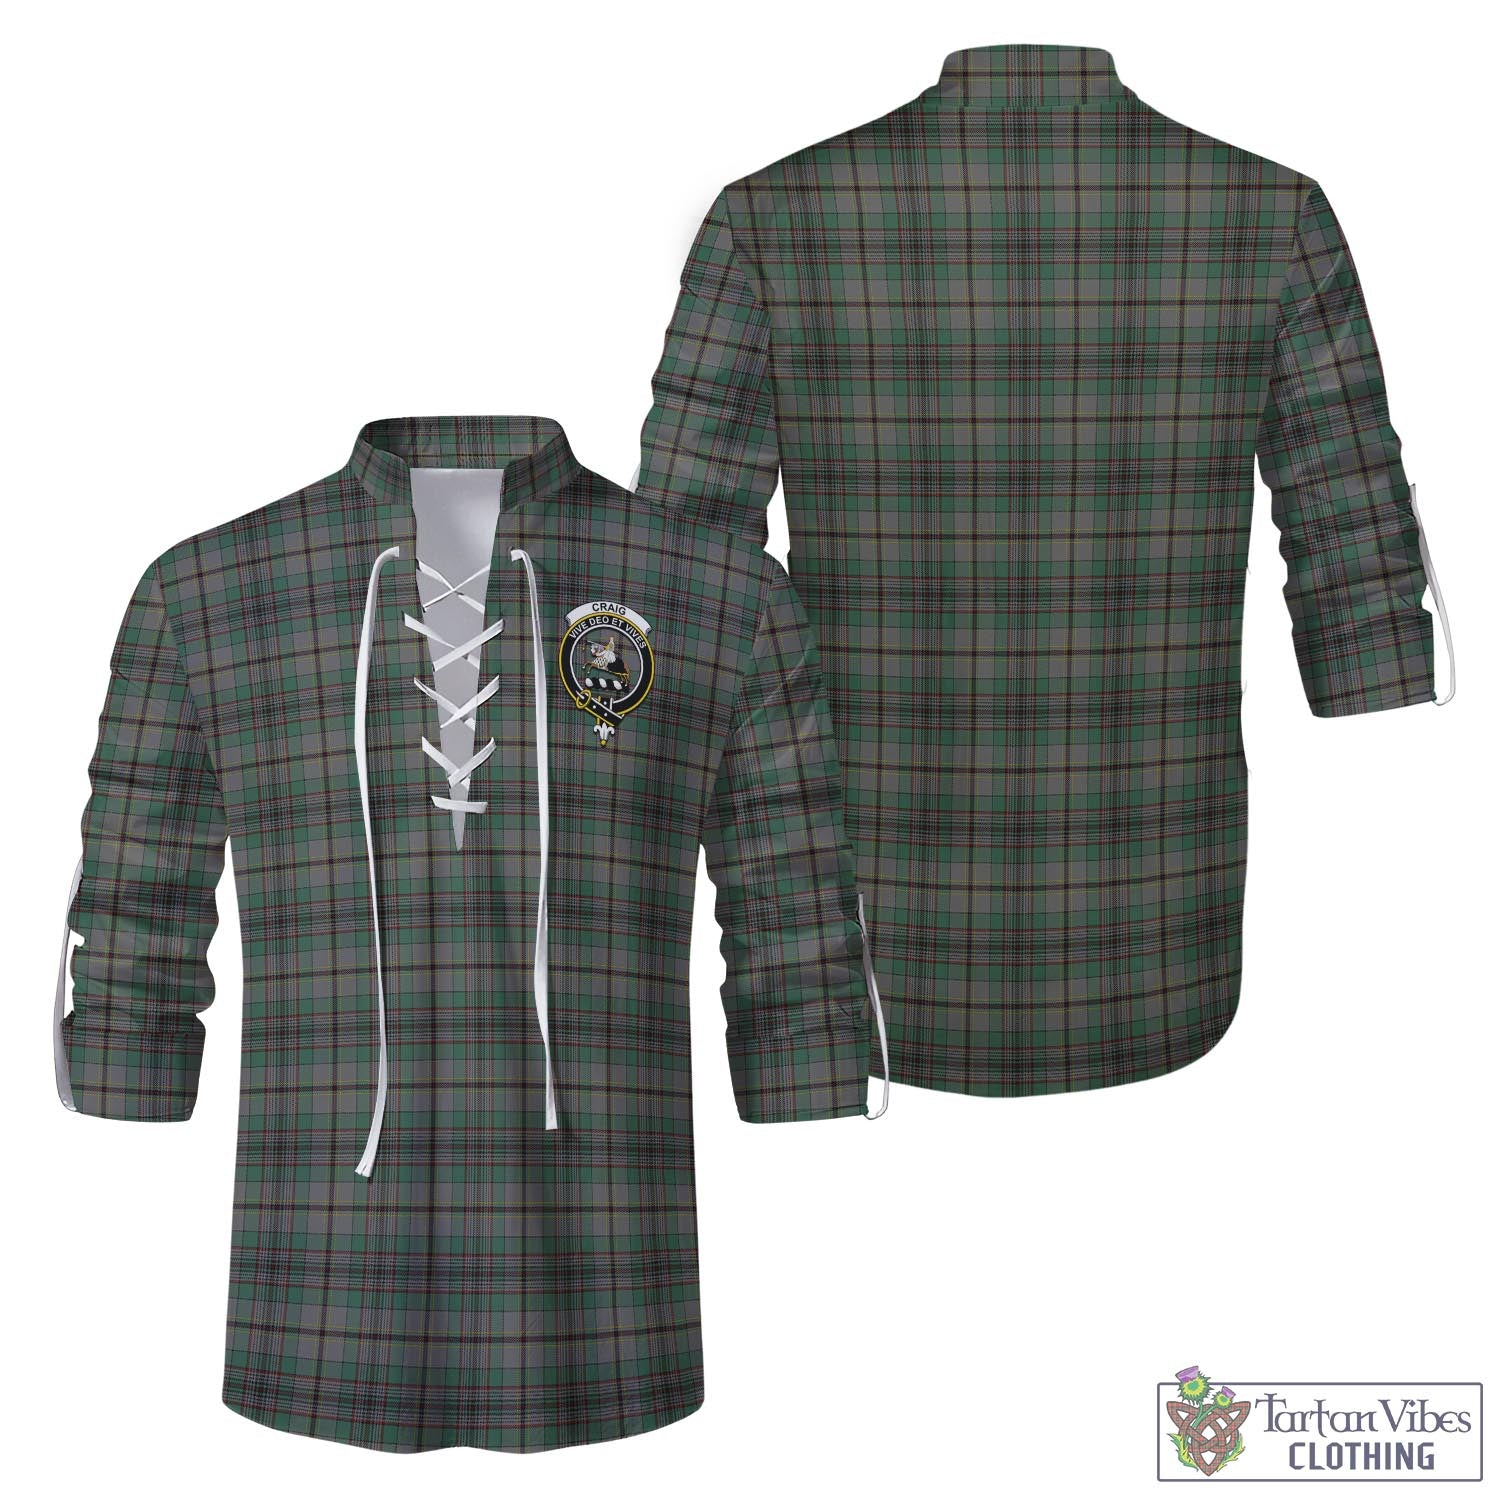 Tartan Vibes Clothing Craig Tartan Men's Scottish Traditional Jacobite Ghillie Kilt Shirt with Family Crest